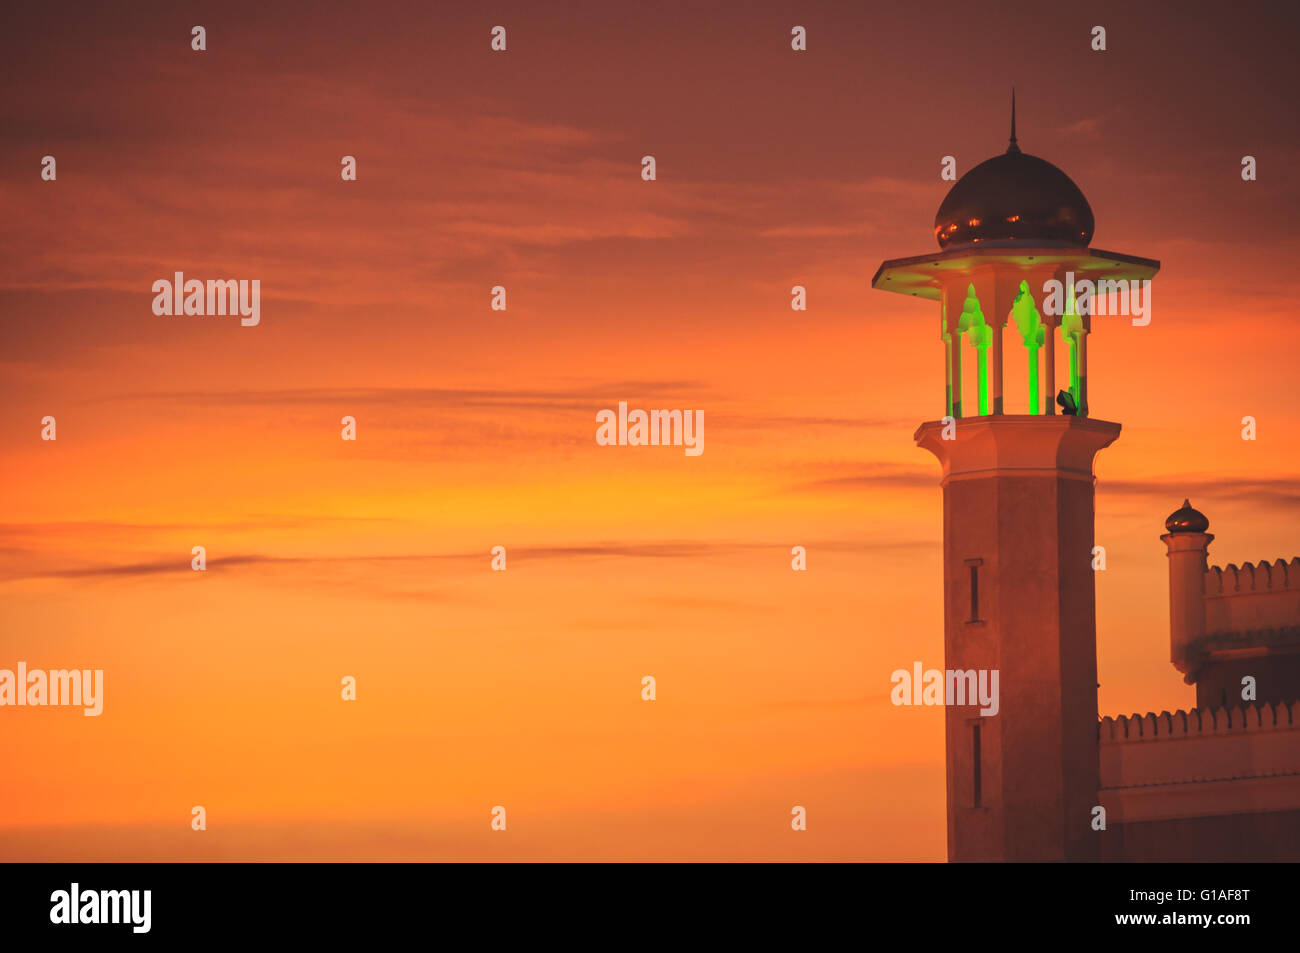 The Saifuddin mosque at sunset in Bandar Seri Bagawan, Brunei Stock Photo